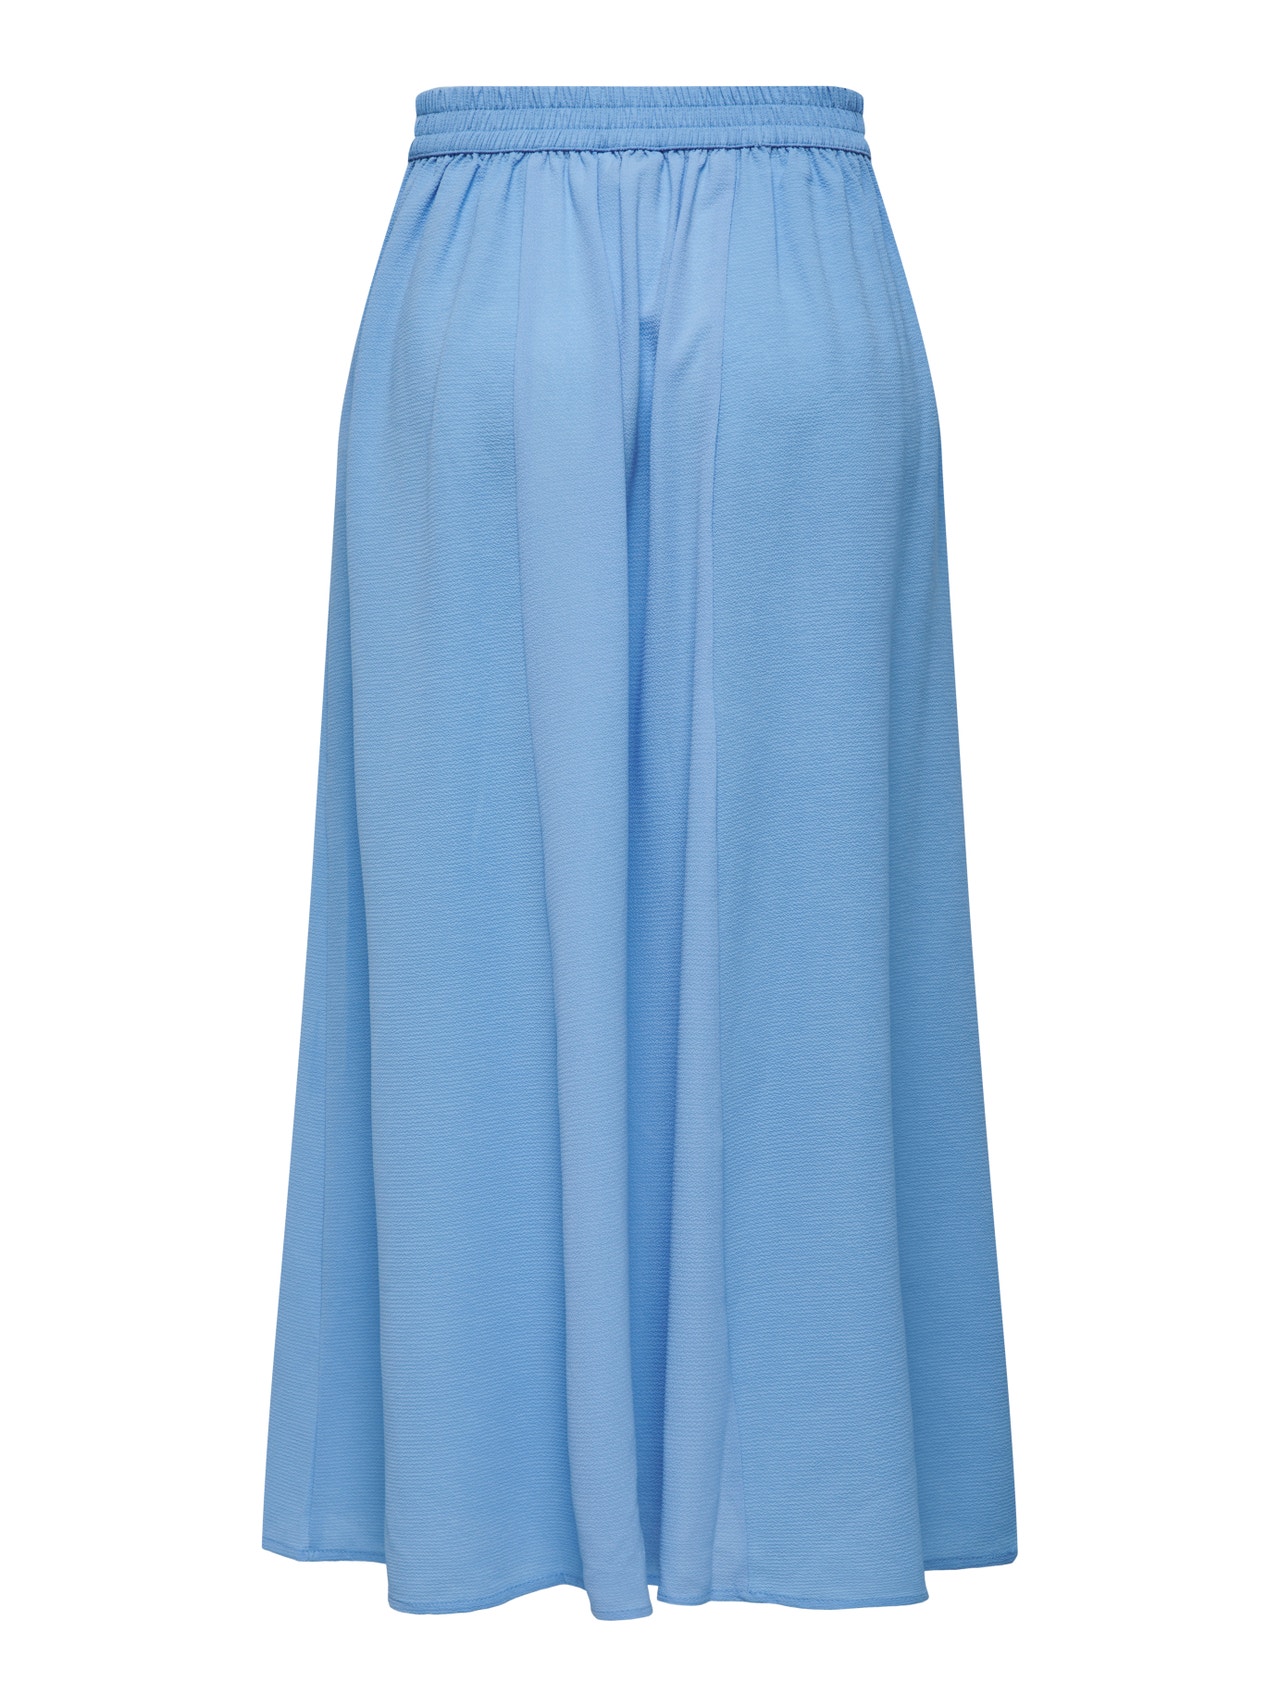 ONLY Midi skirt -Provence - 15233735